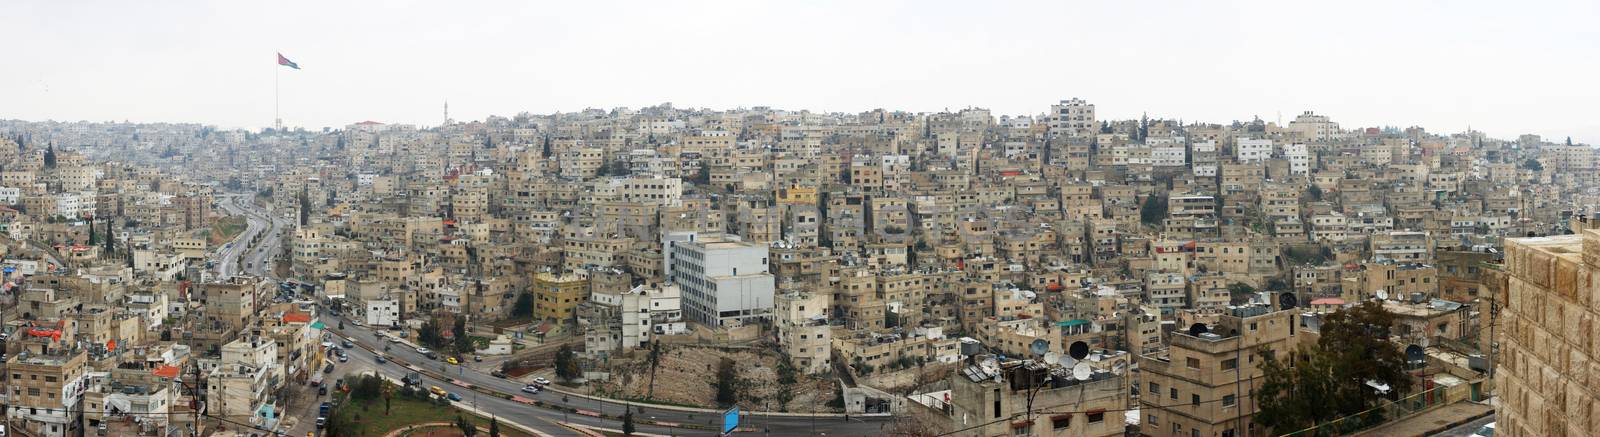 Urban city in middle east - downtown center of Jordan capital Amman 